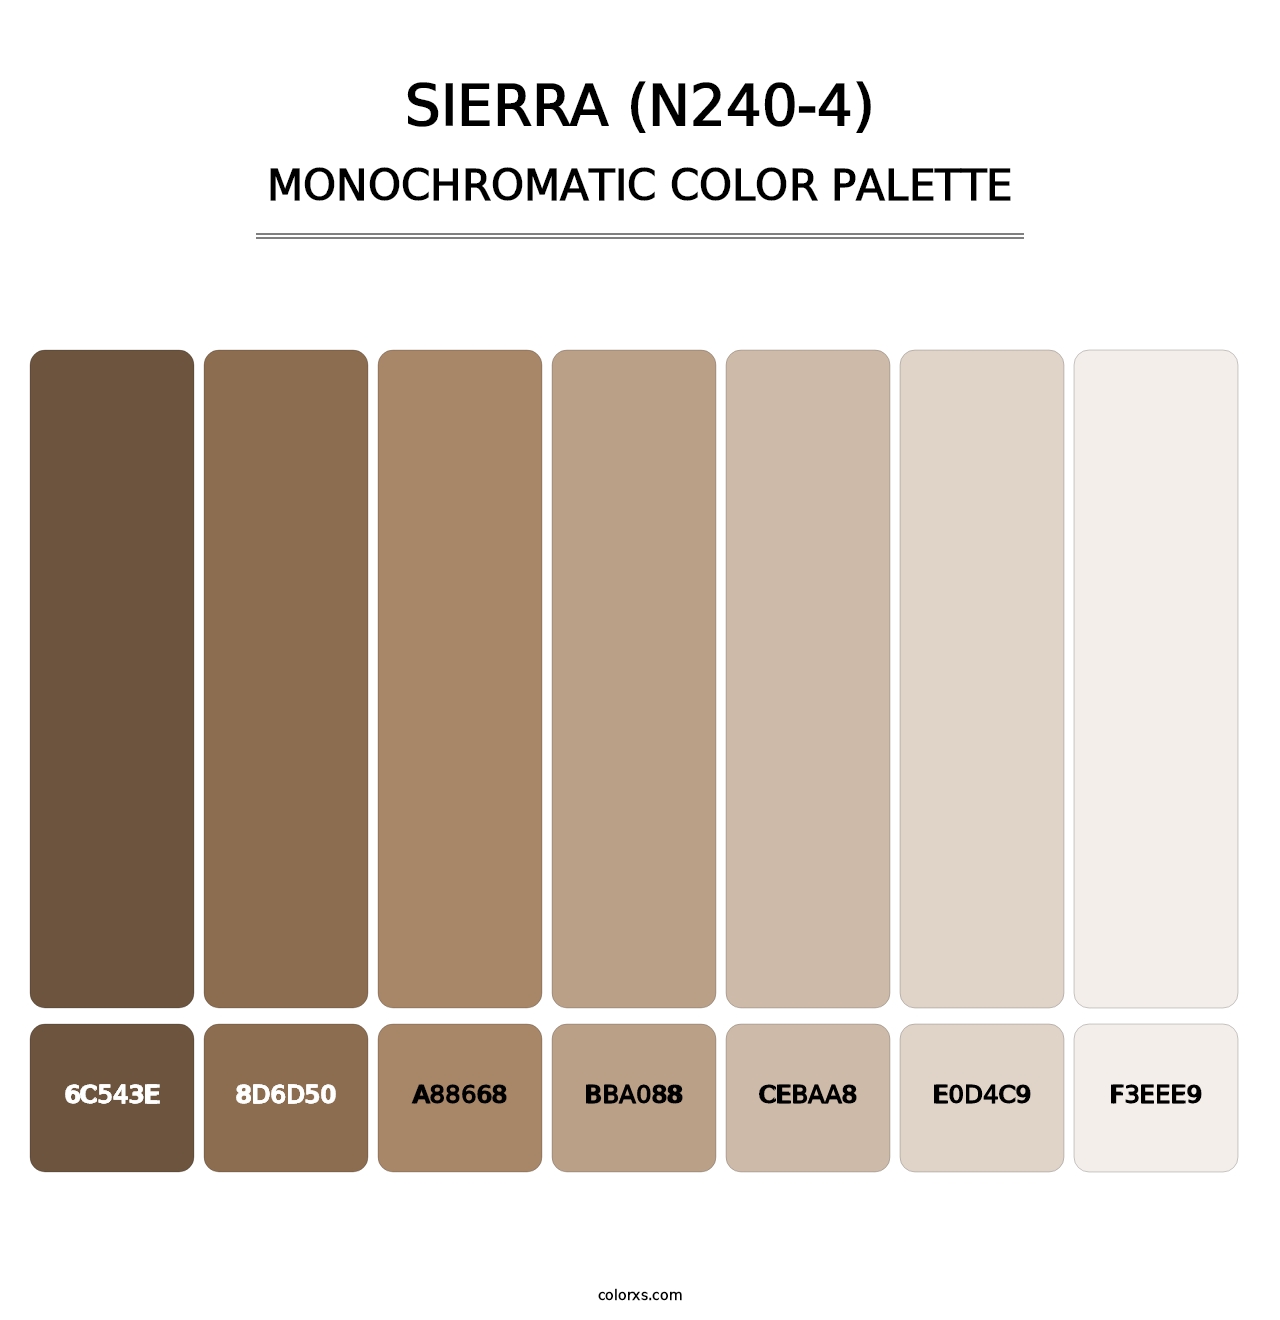 Sierra (N240-4) - Monochromatic Color Palette